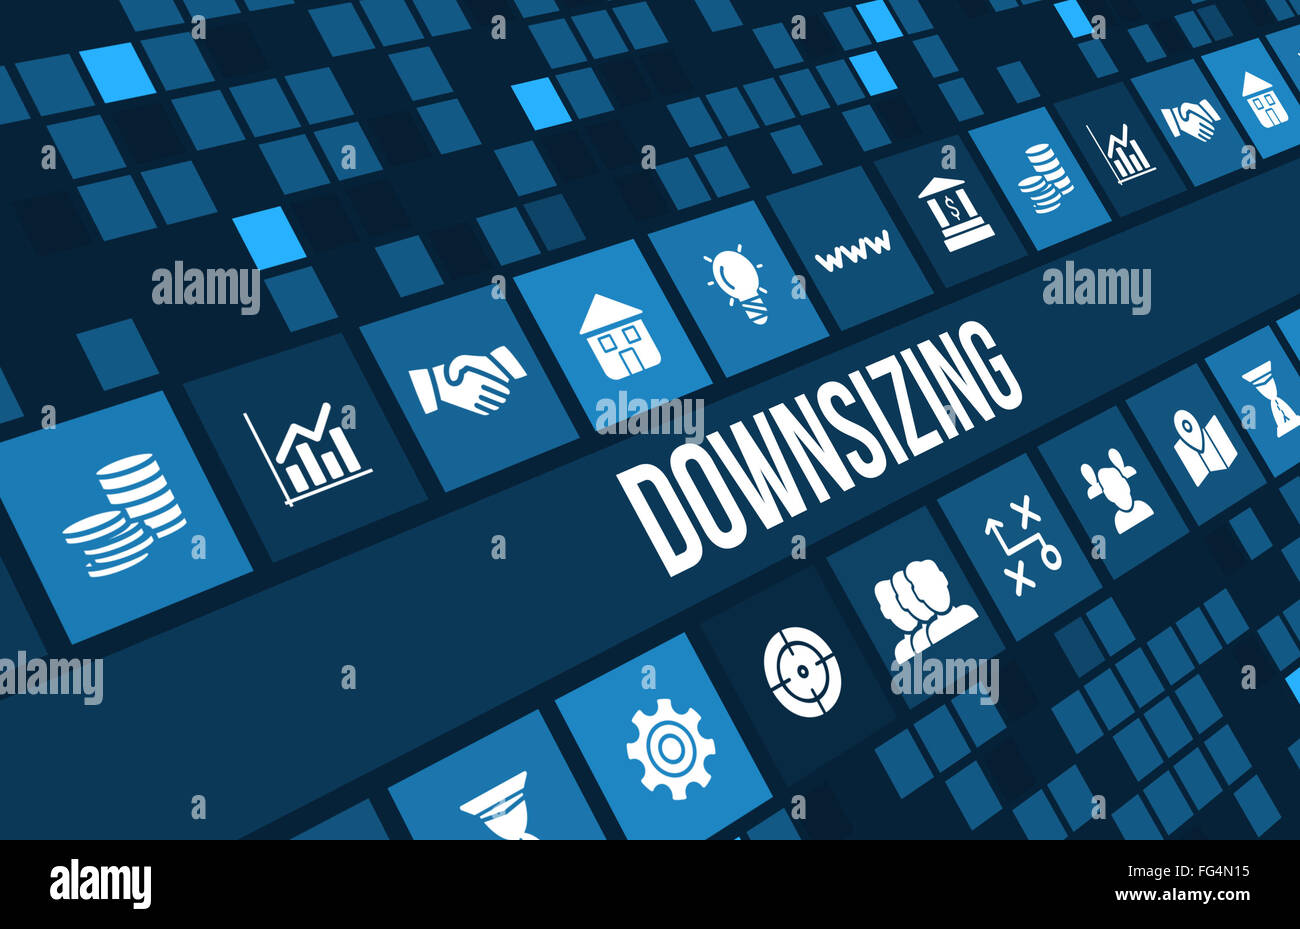 Downsizing-Konzept mit Business Icons und Exemplar Bild. Stockfoto